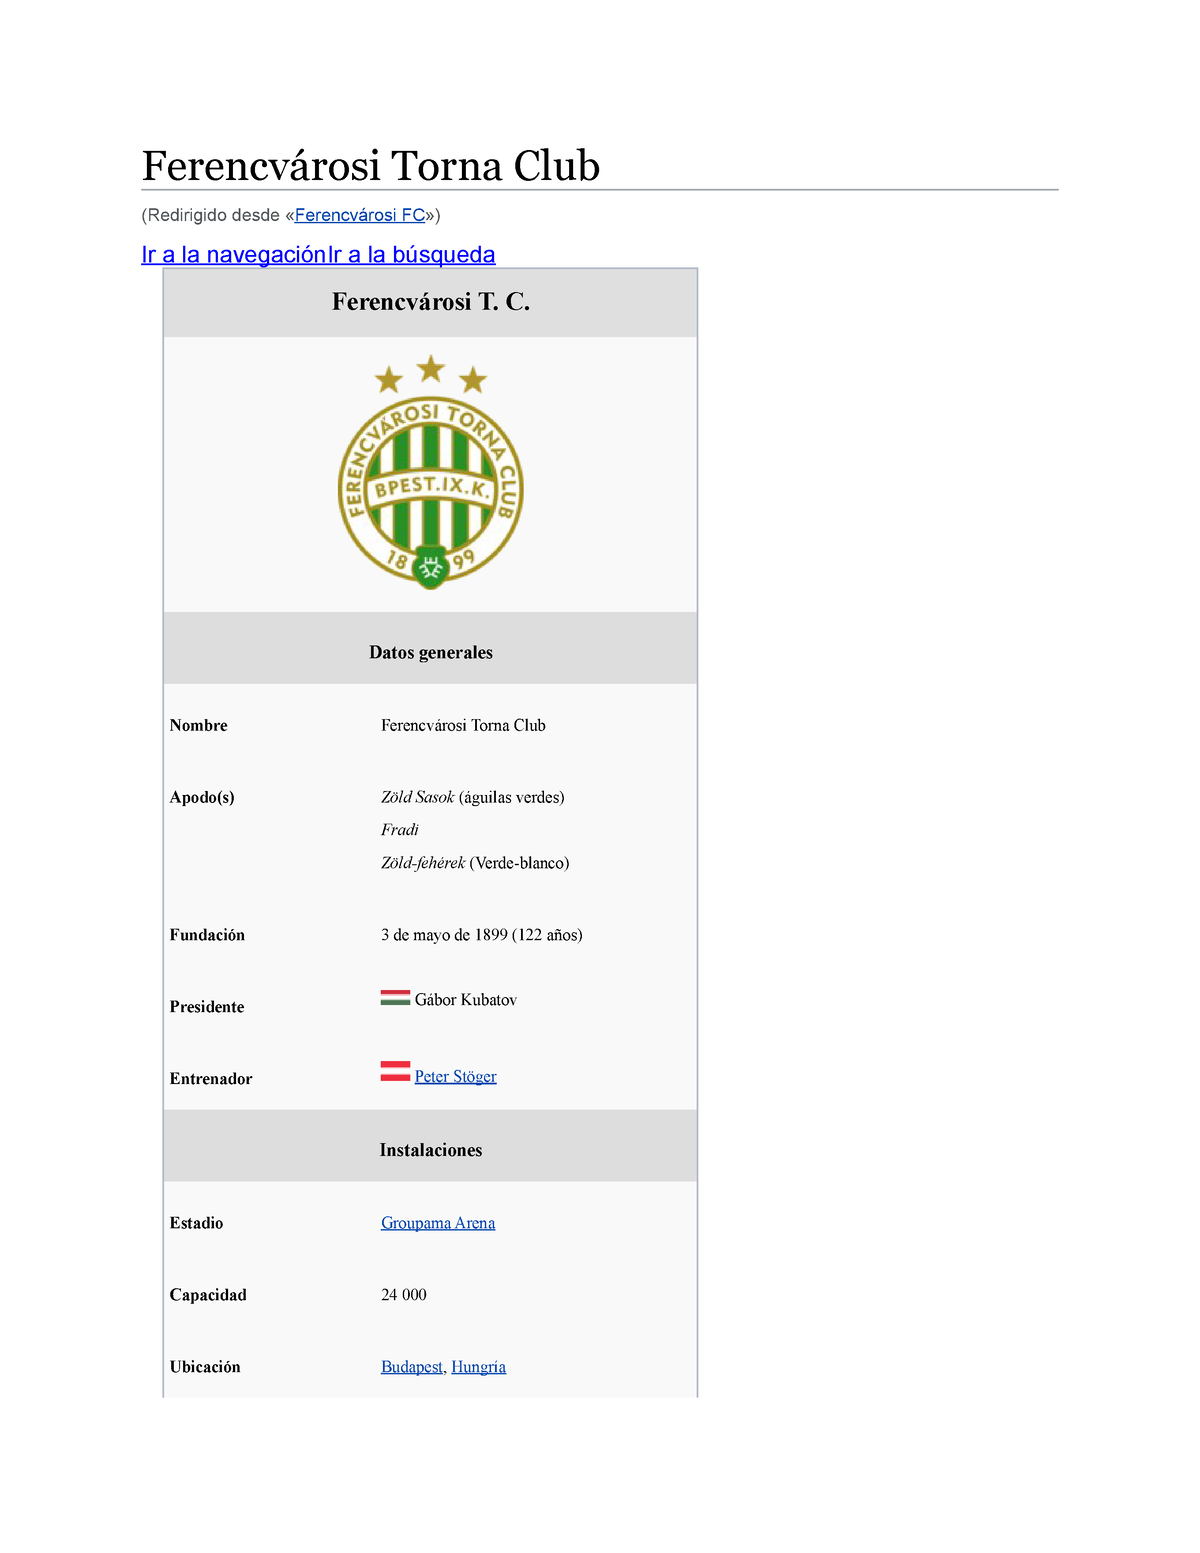 Real Betis v Ferencvarosi TC: Group G - UEFA Europa League Marijan